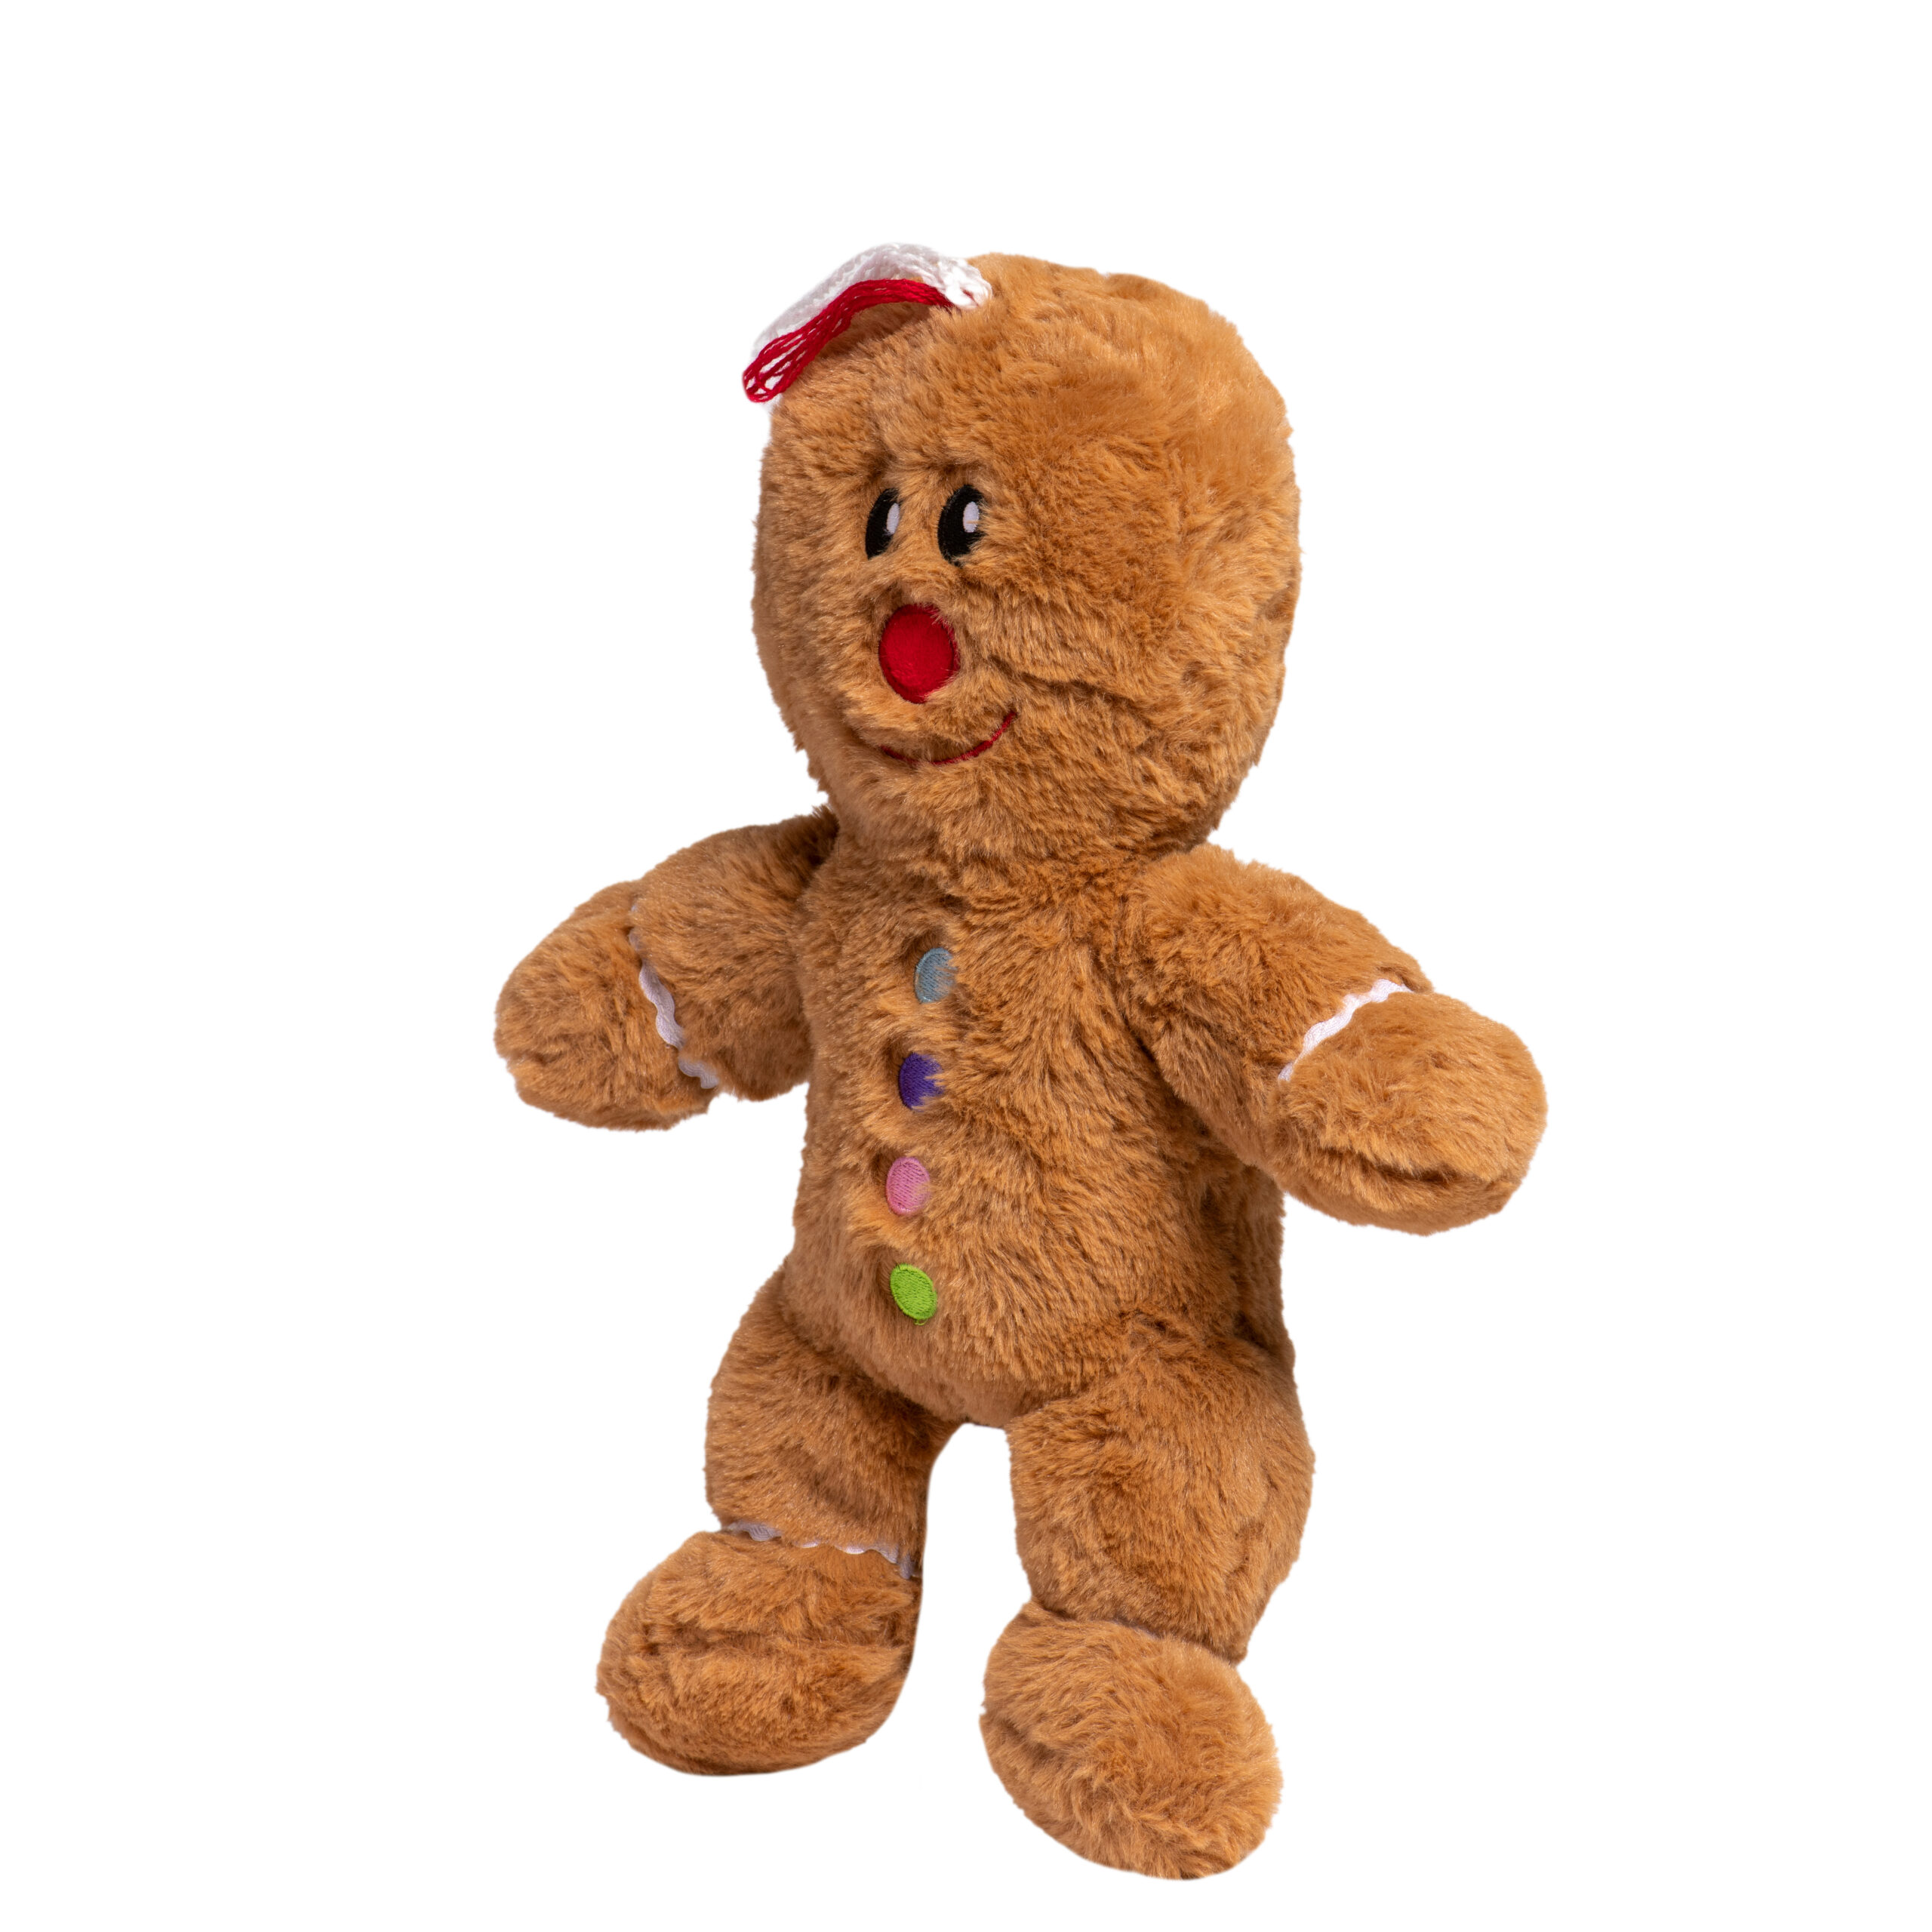 15" Gingerbread Man